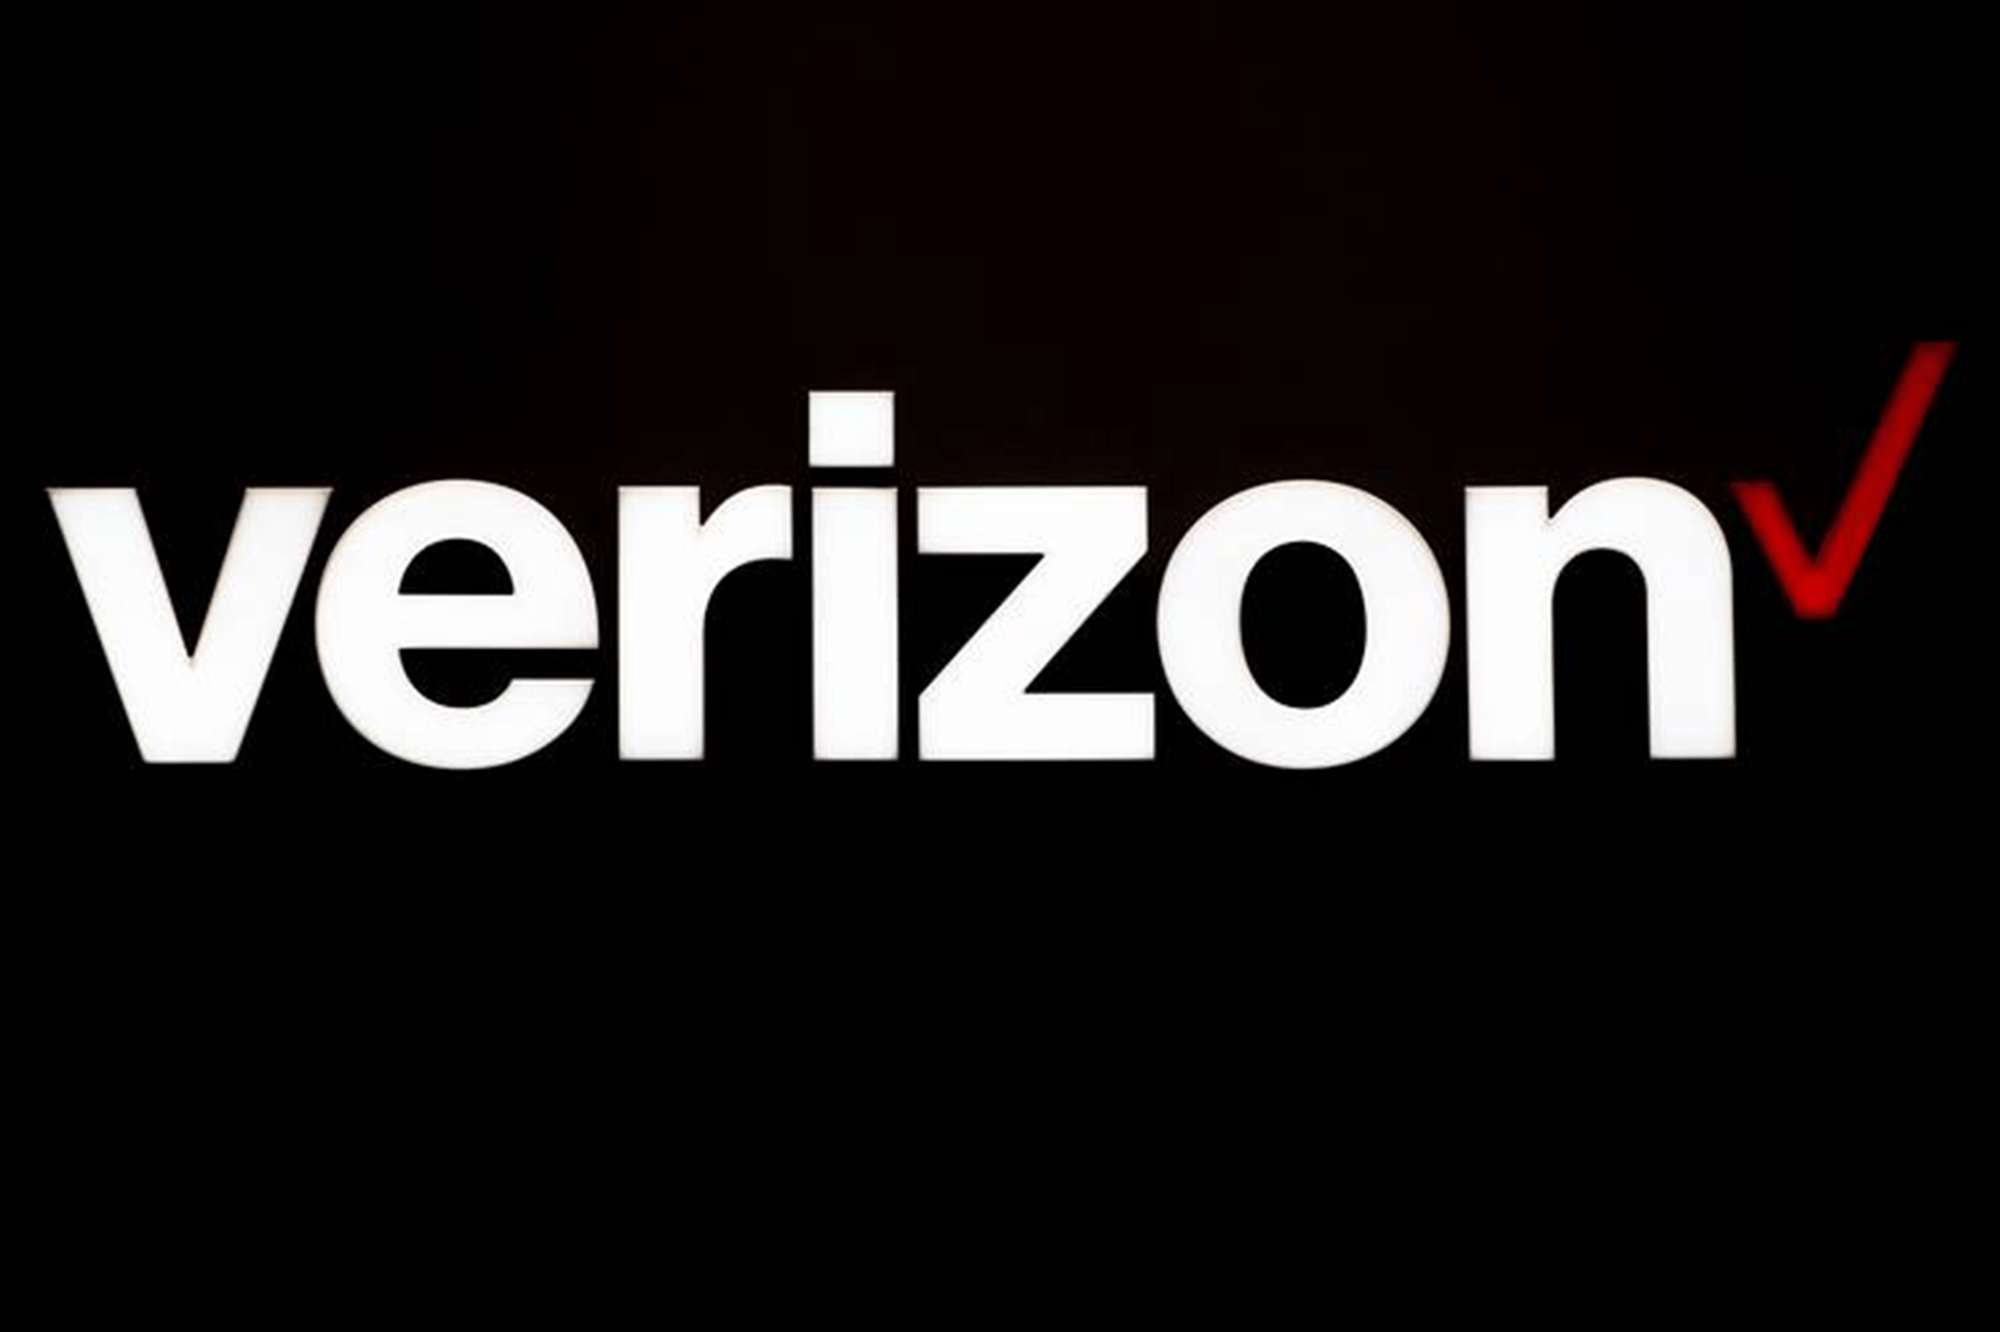 Verizon.net Logo - Verizon Communications | Metro Goldwyn Mayer Wiki | FANDOM powered ...